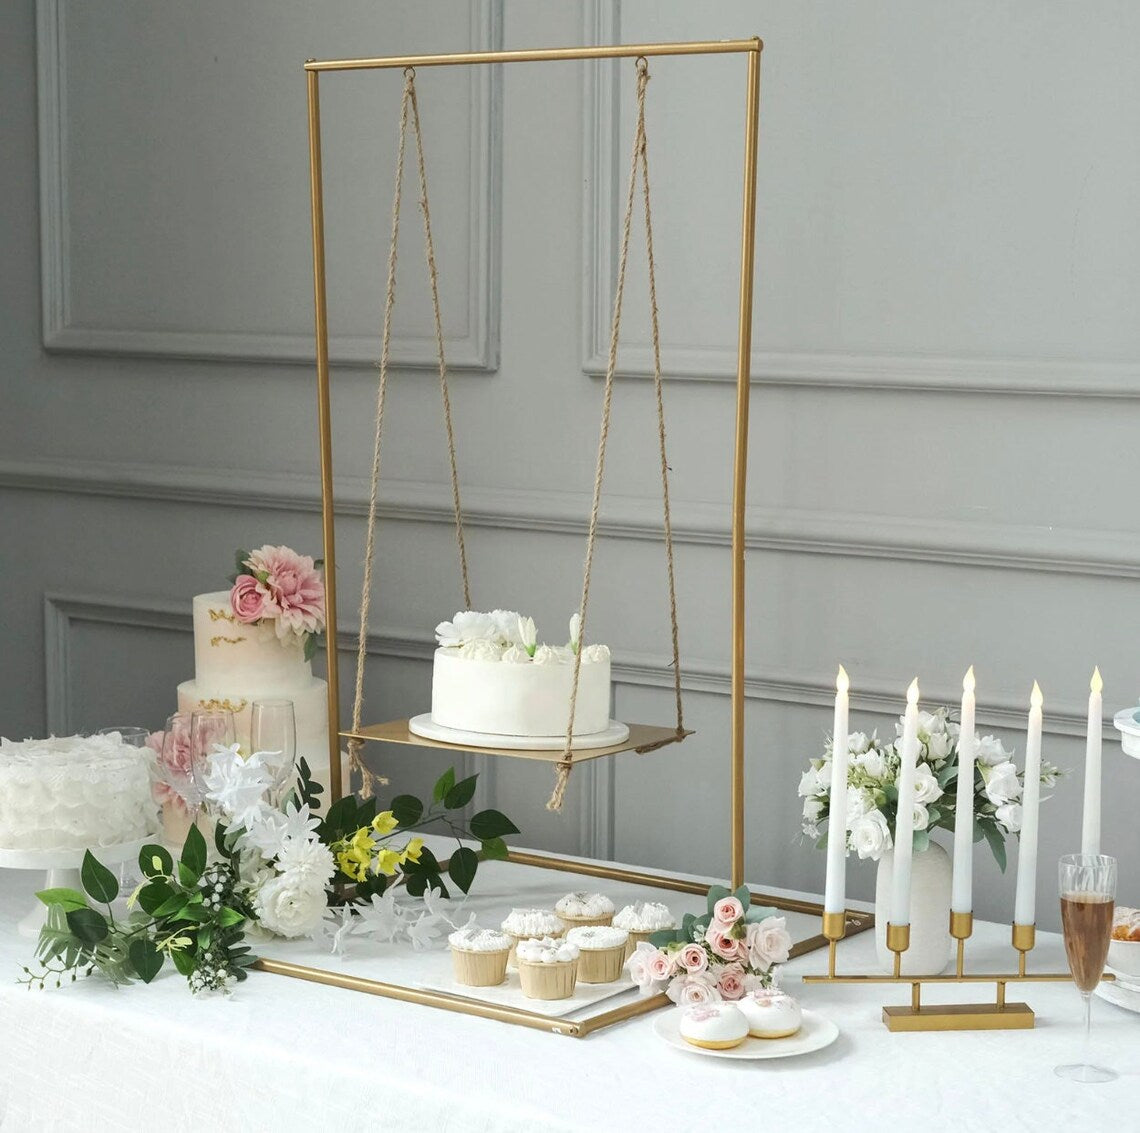 3 FT. Gold Metal Hanging Dessert Display Centerpiece Cake Stand